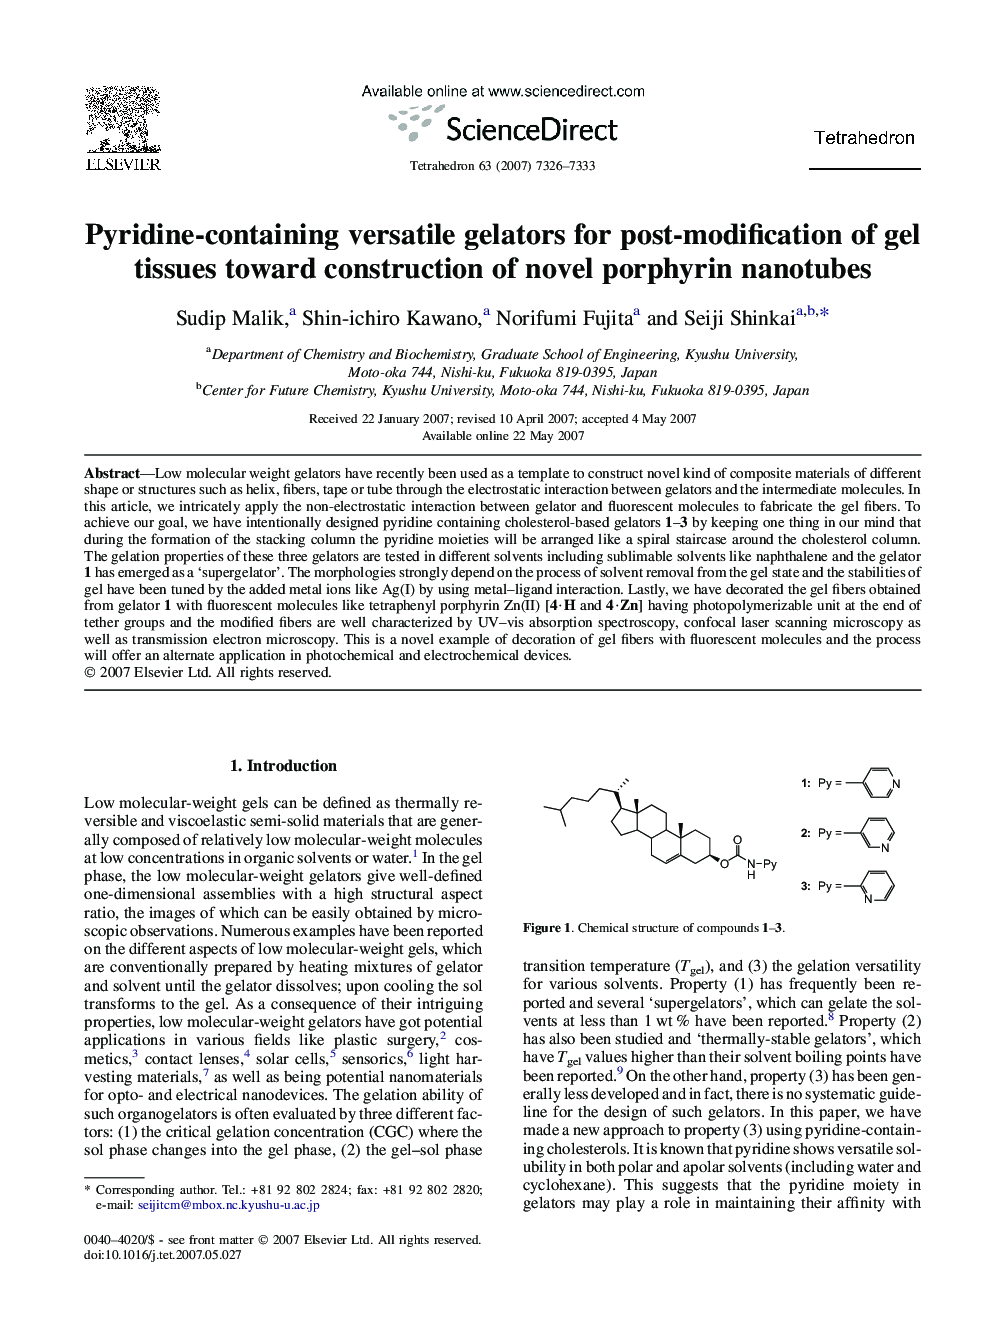 Pyridine-containing versatile gelators for post-modification of gel tissues toward construction of novel porphyrin nanotubes